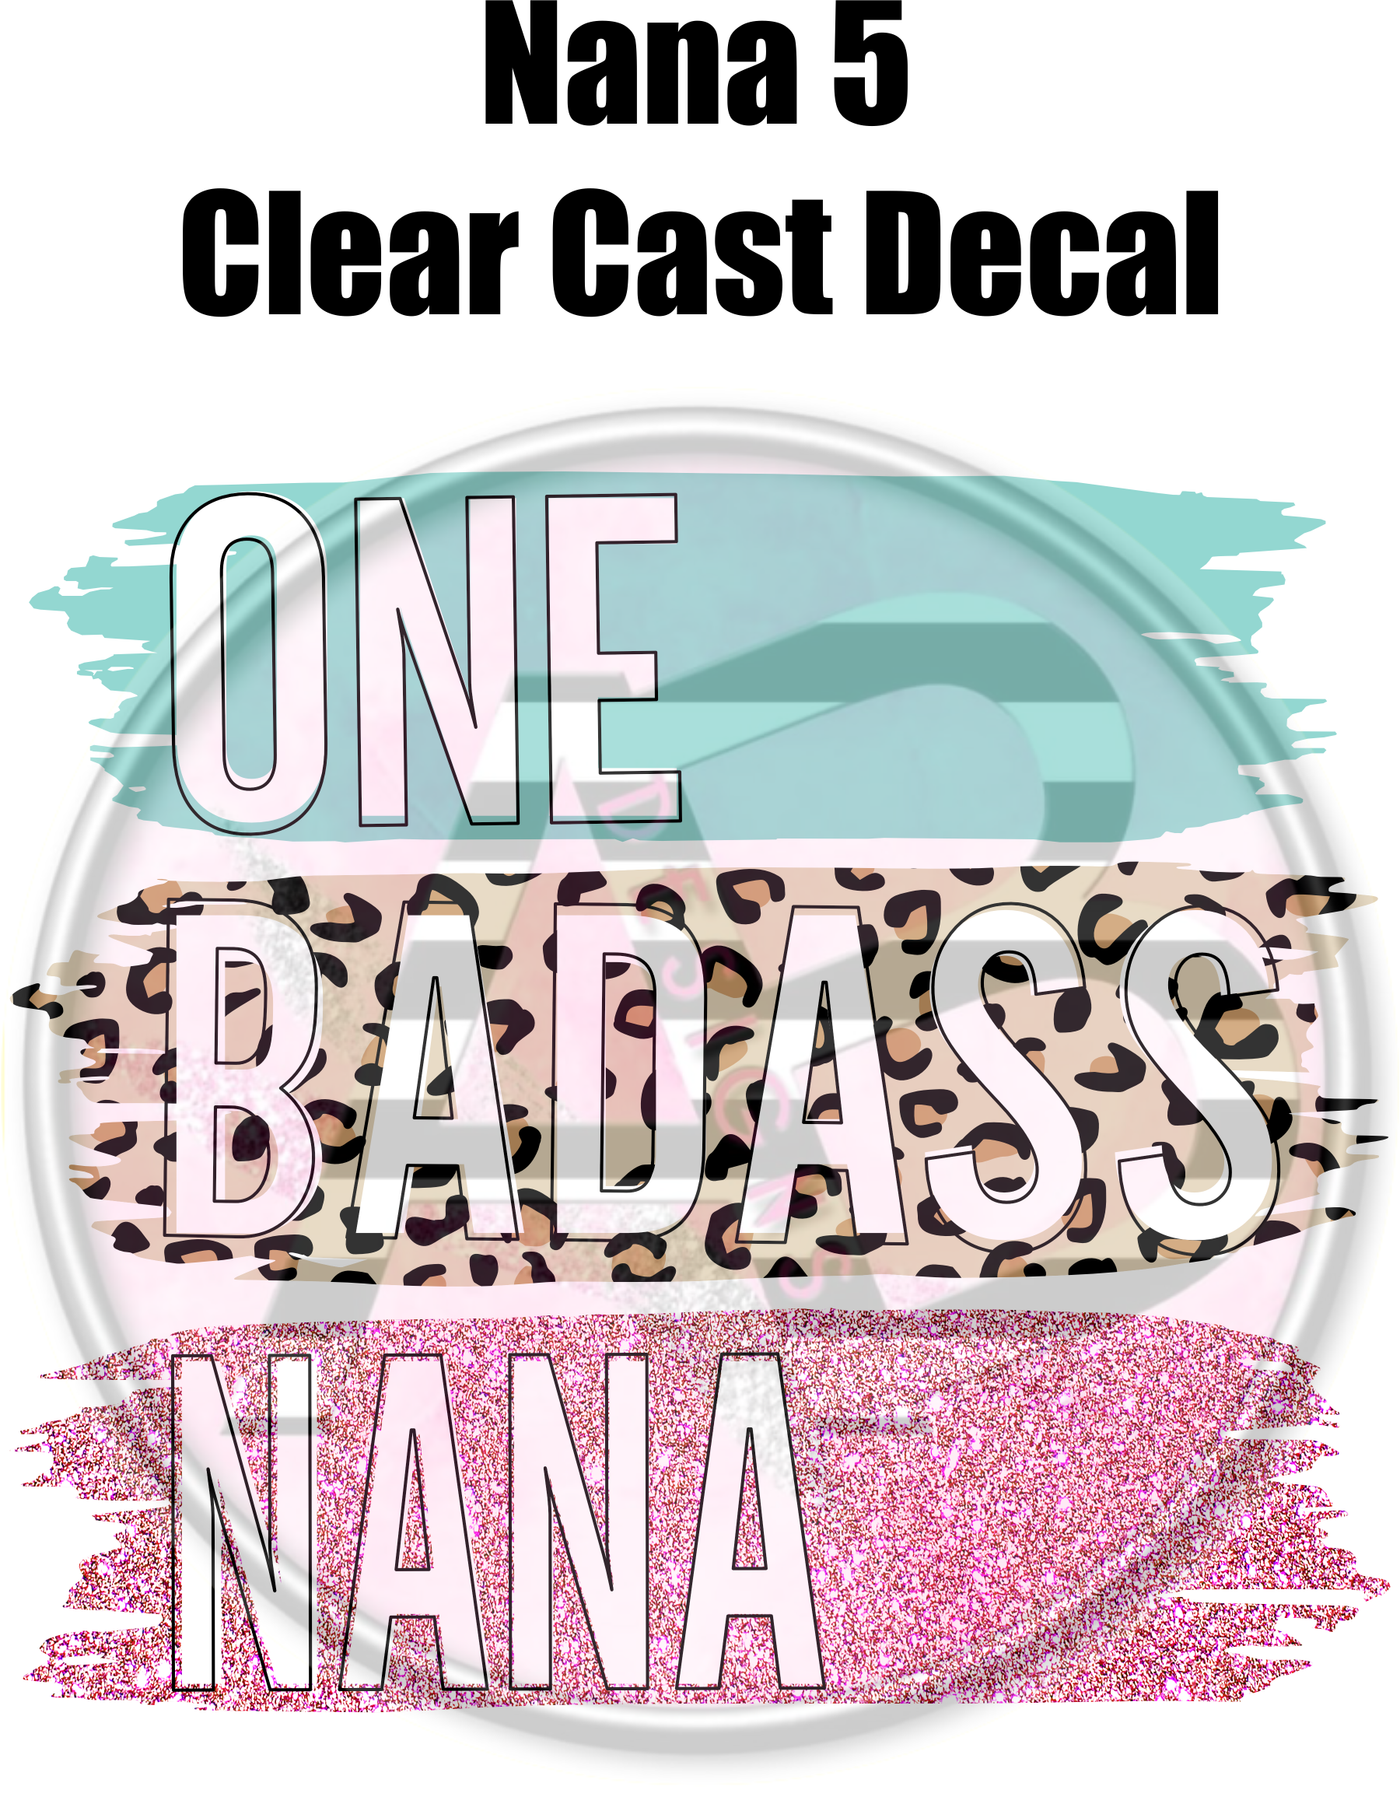 Nana 5 - Clear Cast Decal